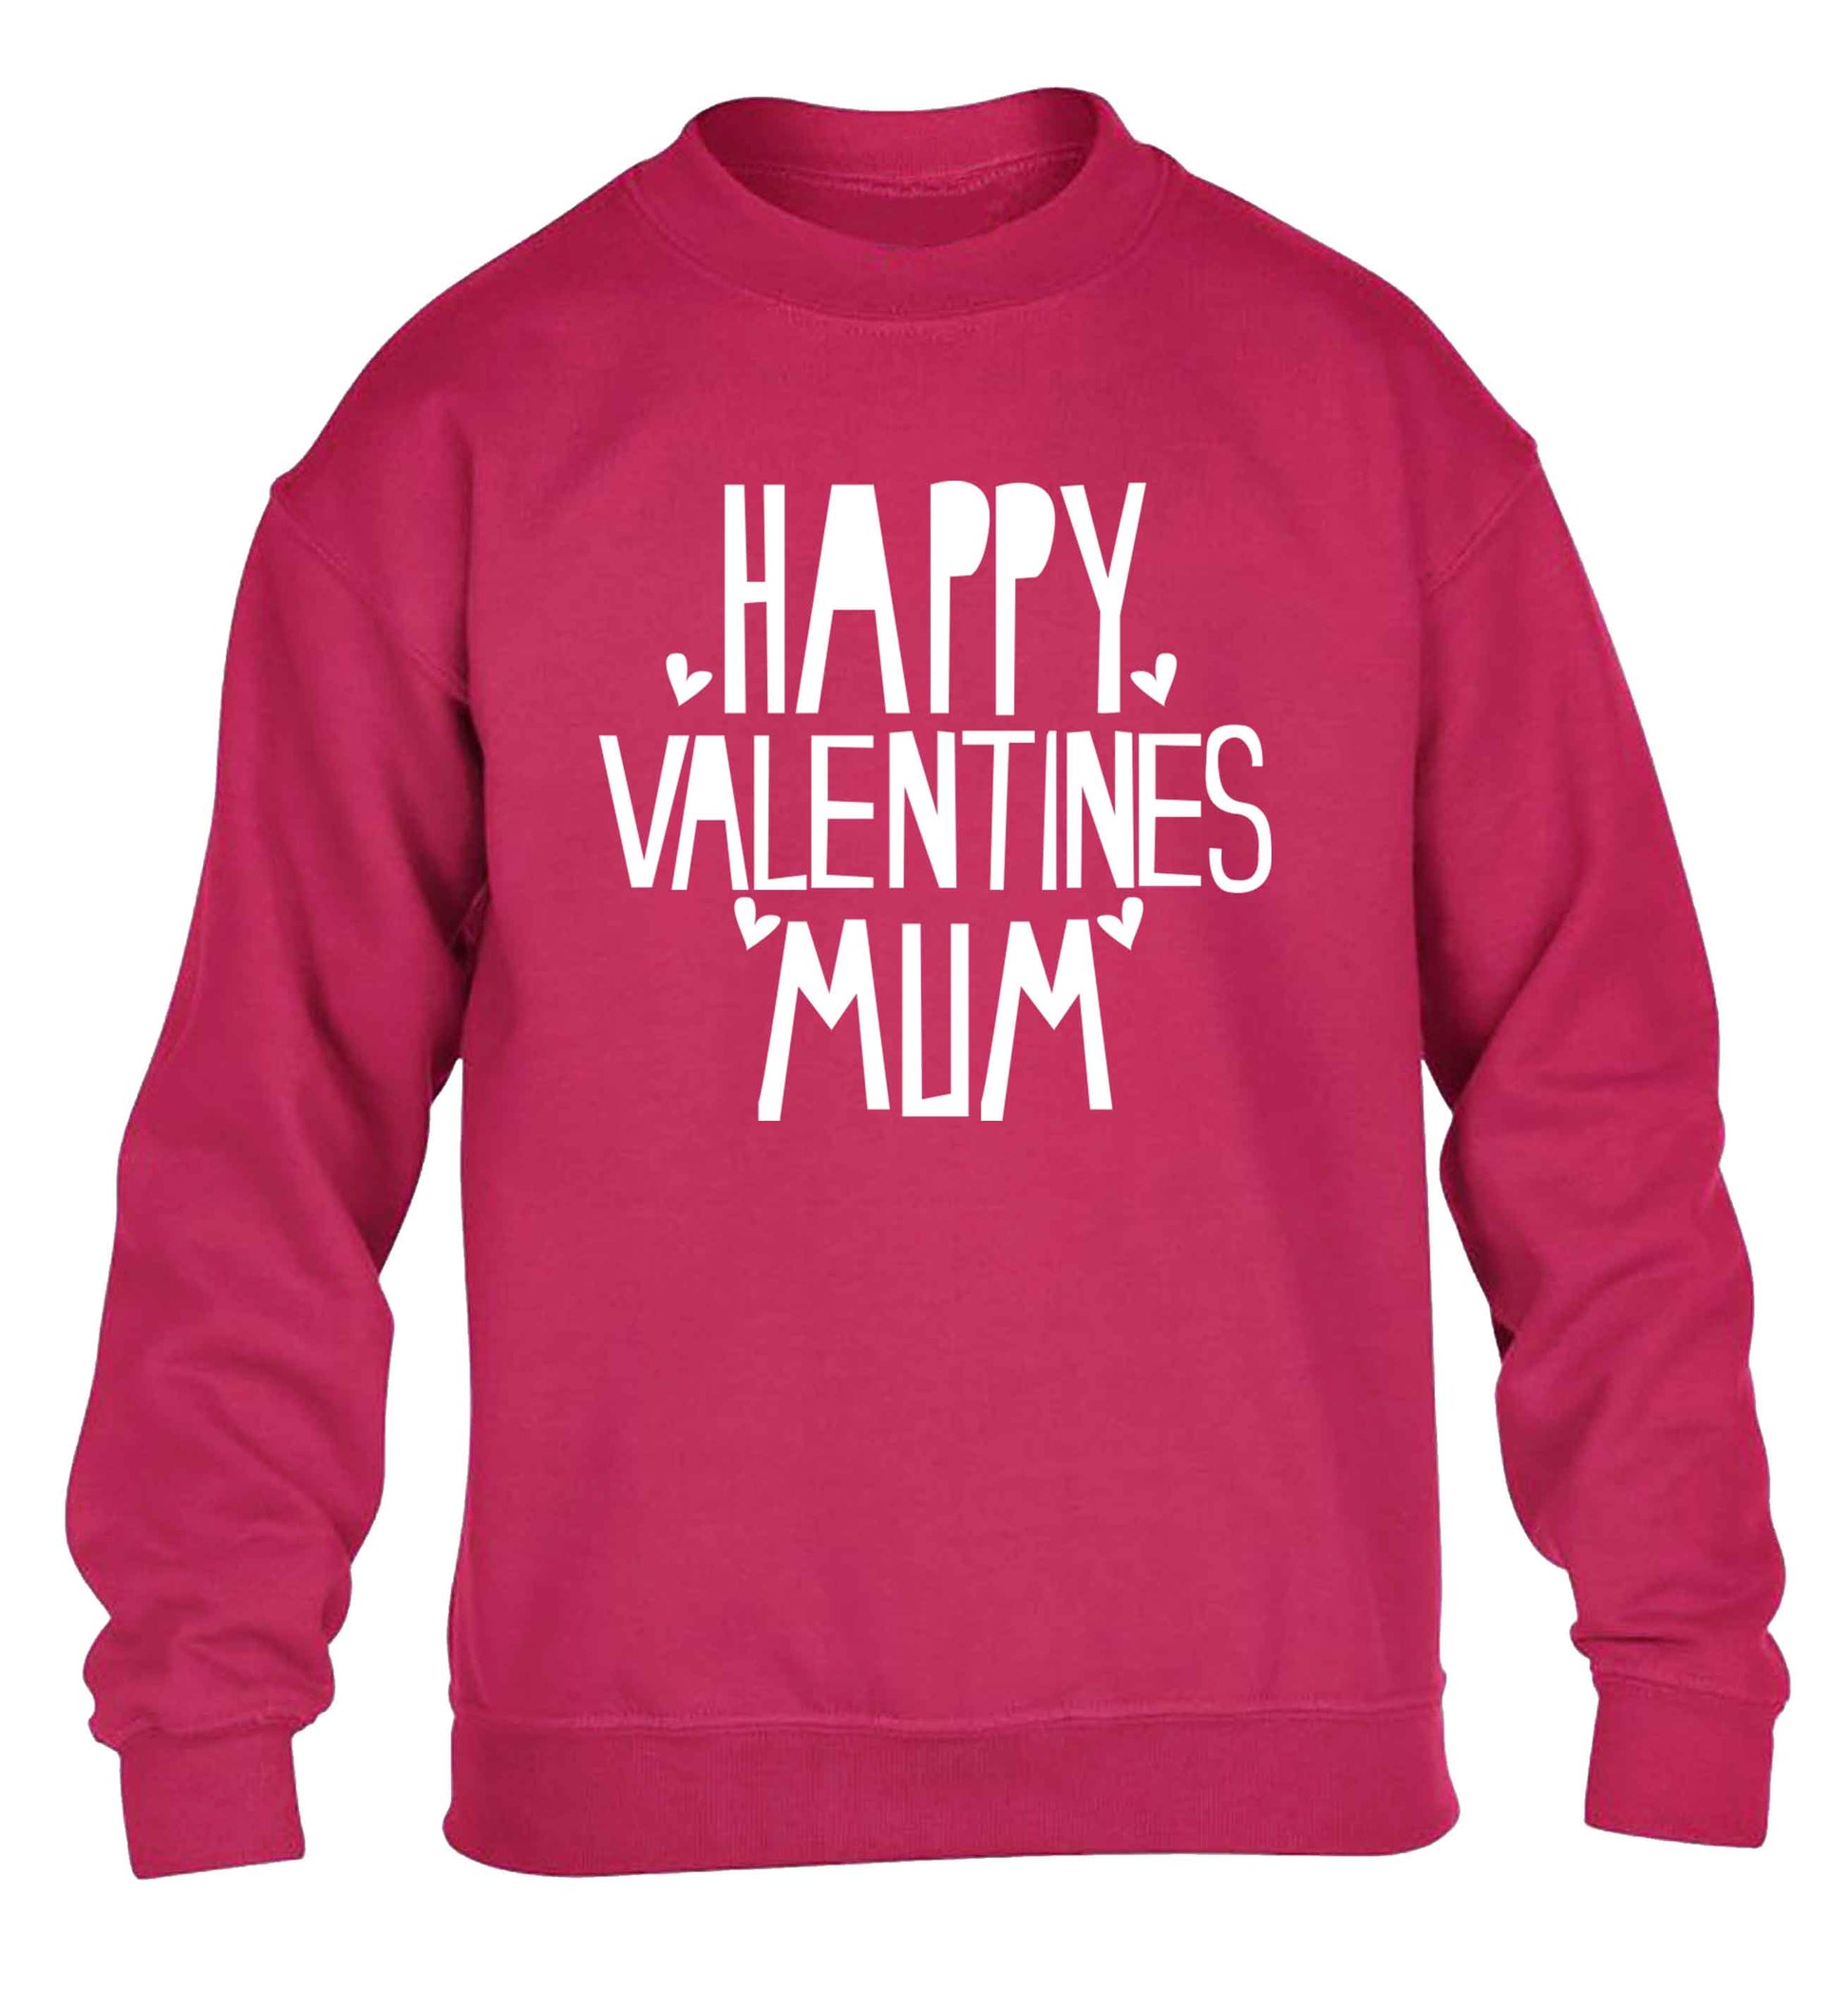 Happy valentines mum children's pink sweater 12-13 Years